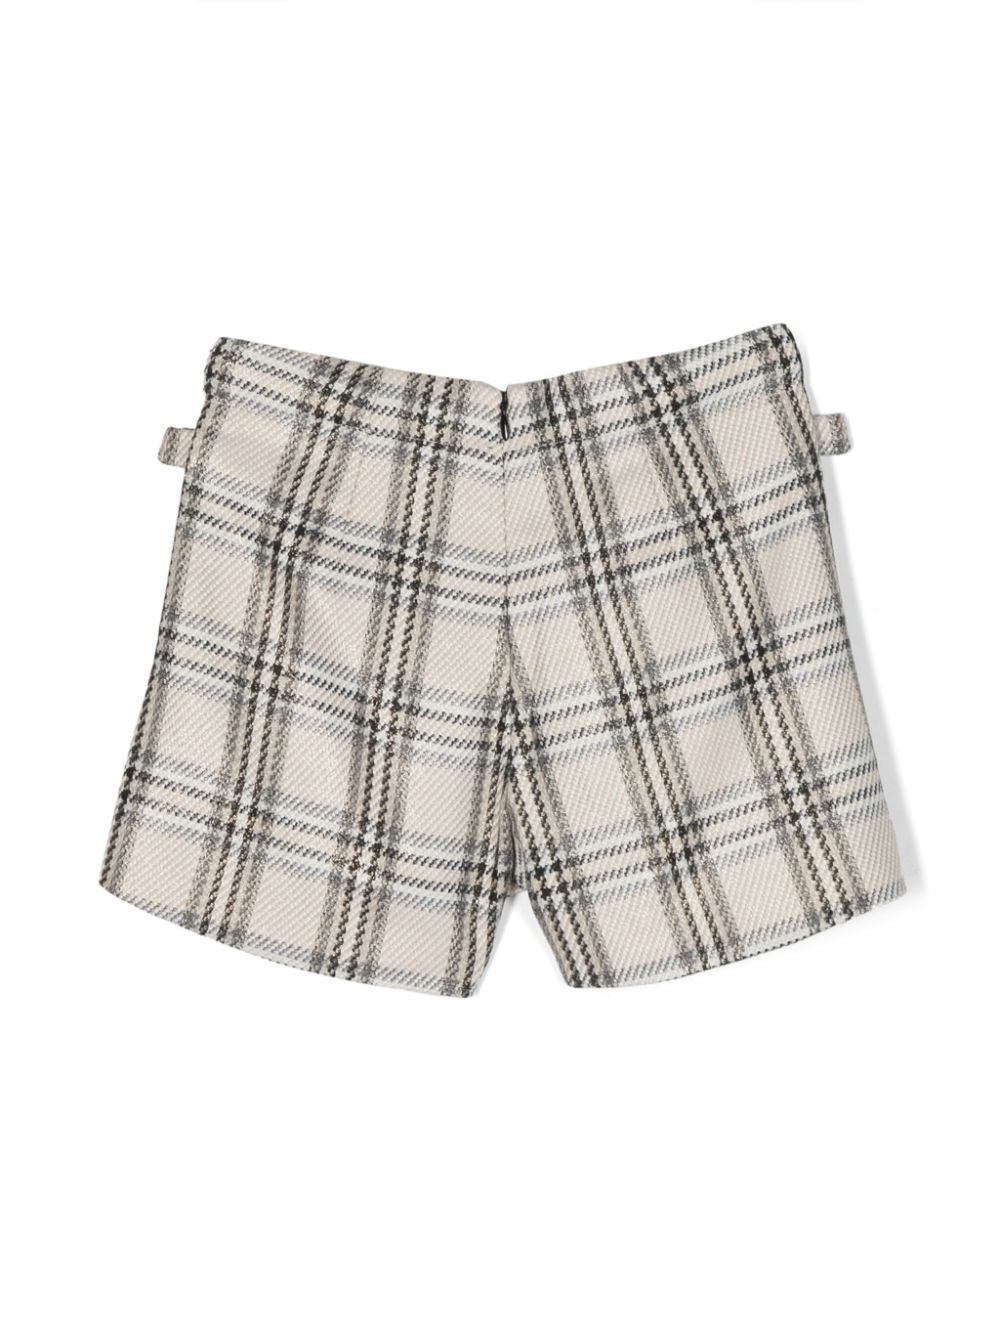 Beige shorts for girls